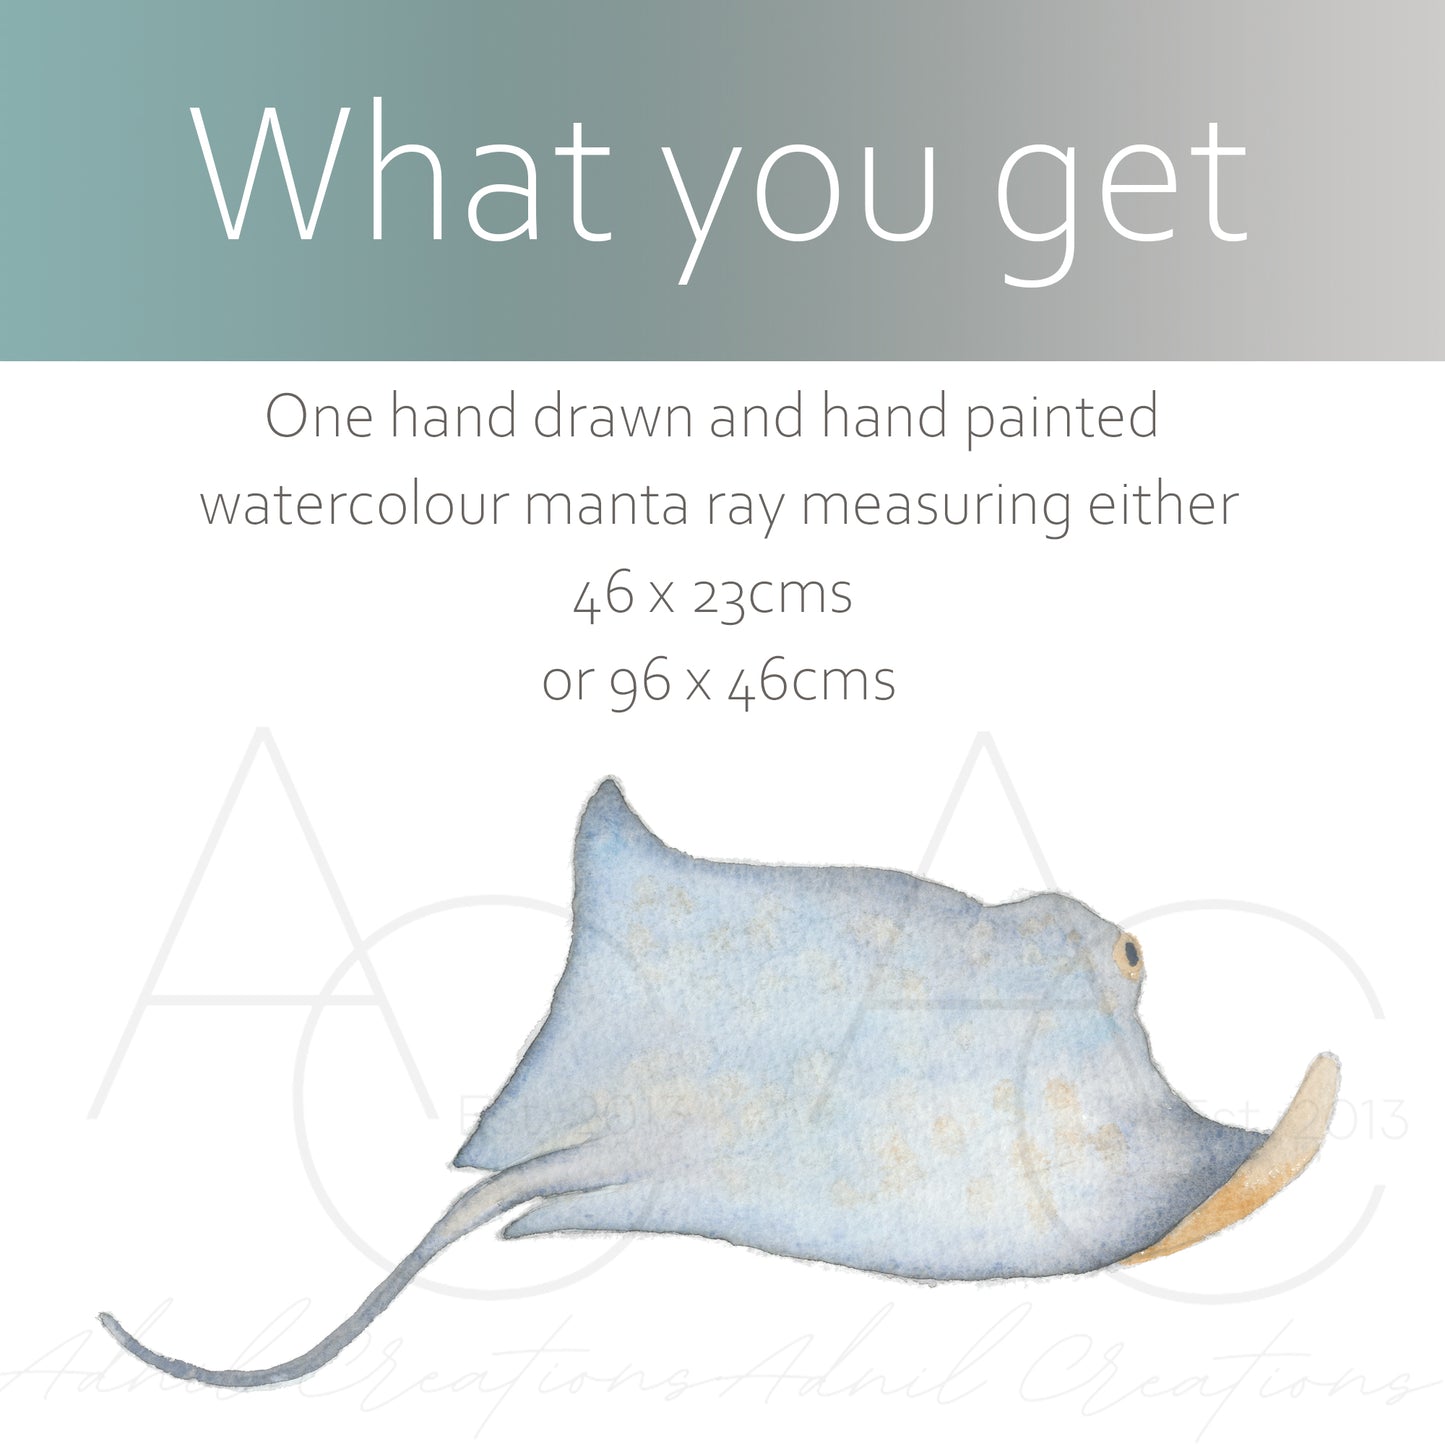 Watercolour manta ray | Fabric wall stickers